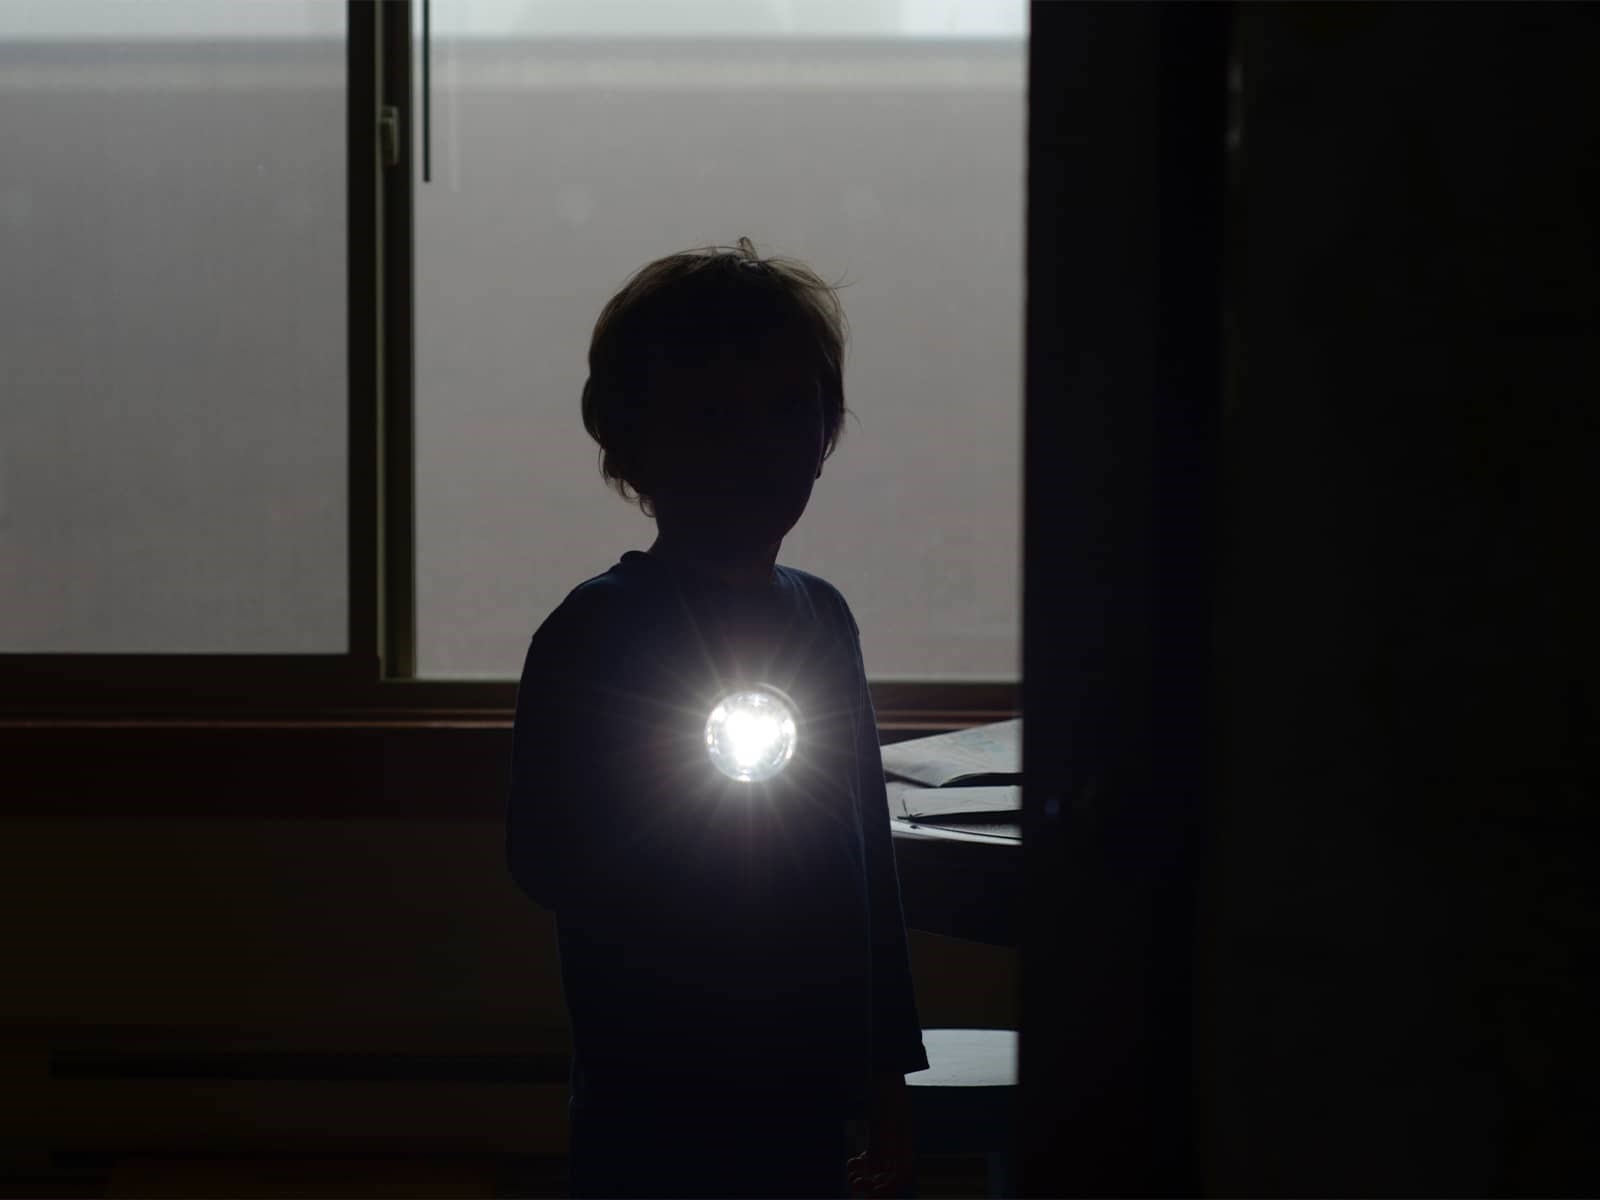 Dreng i mørke med lommelygte - lyset er gået. Find driftsinformation, hvis du har problemer med fibernet, el, vand eller varme. Få driftsstatus med advisering.